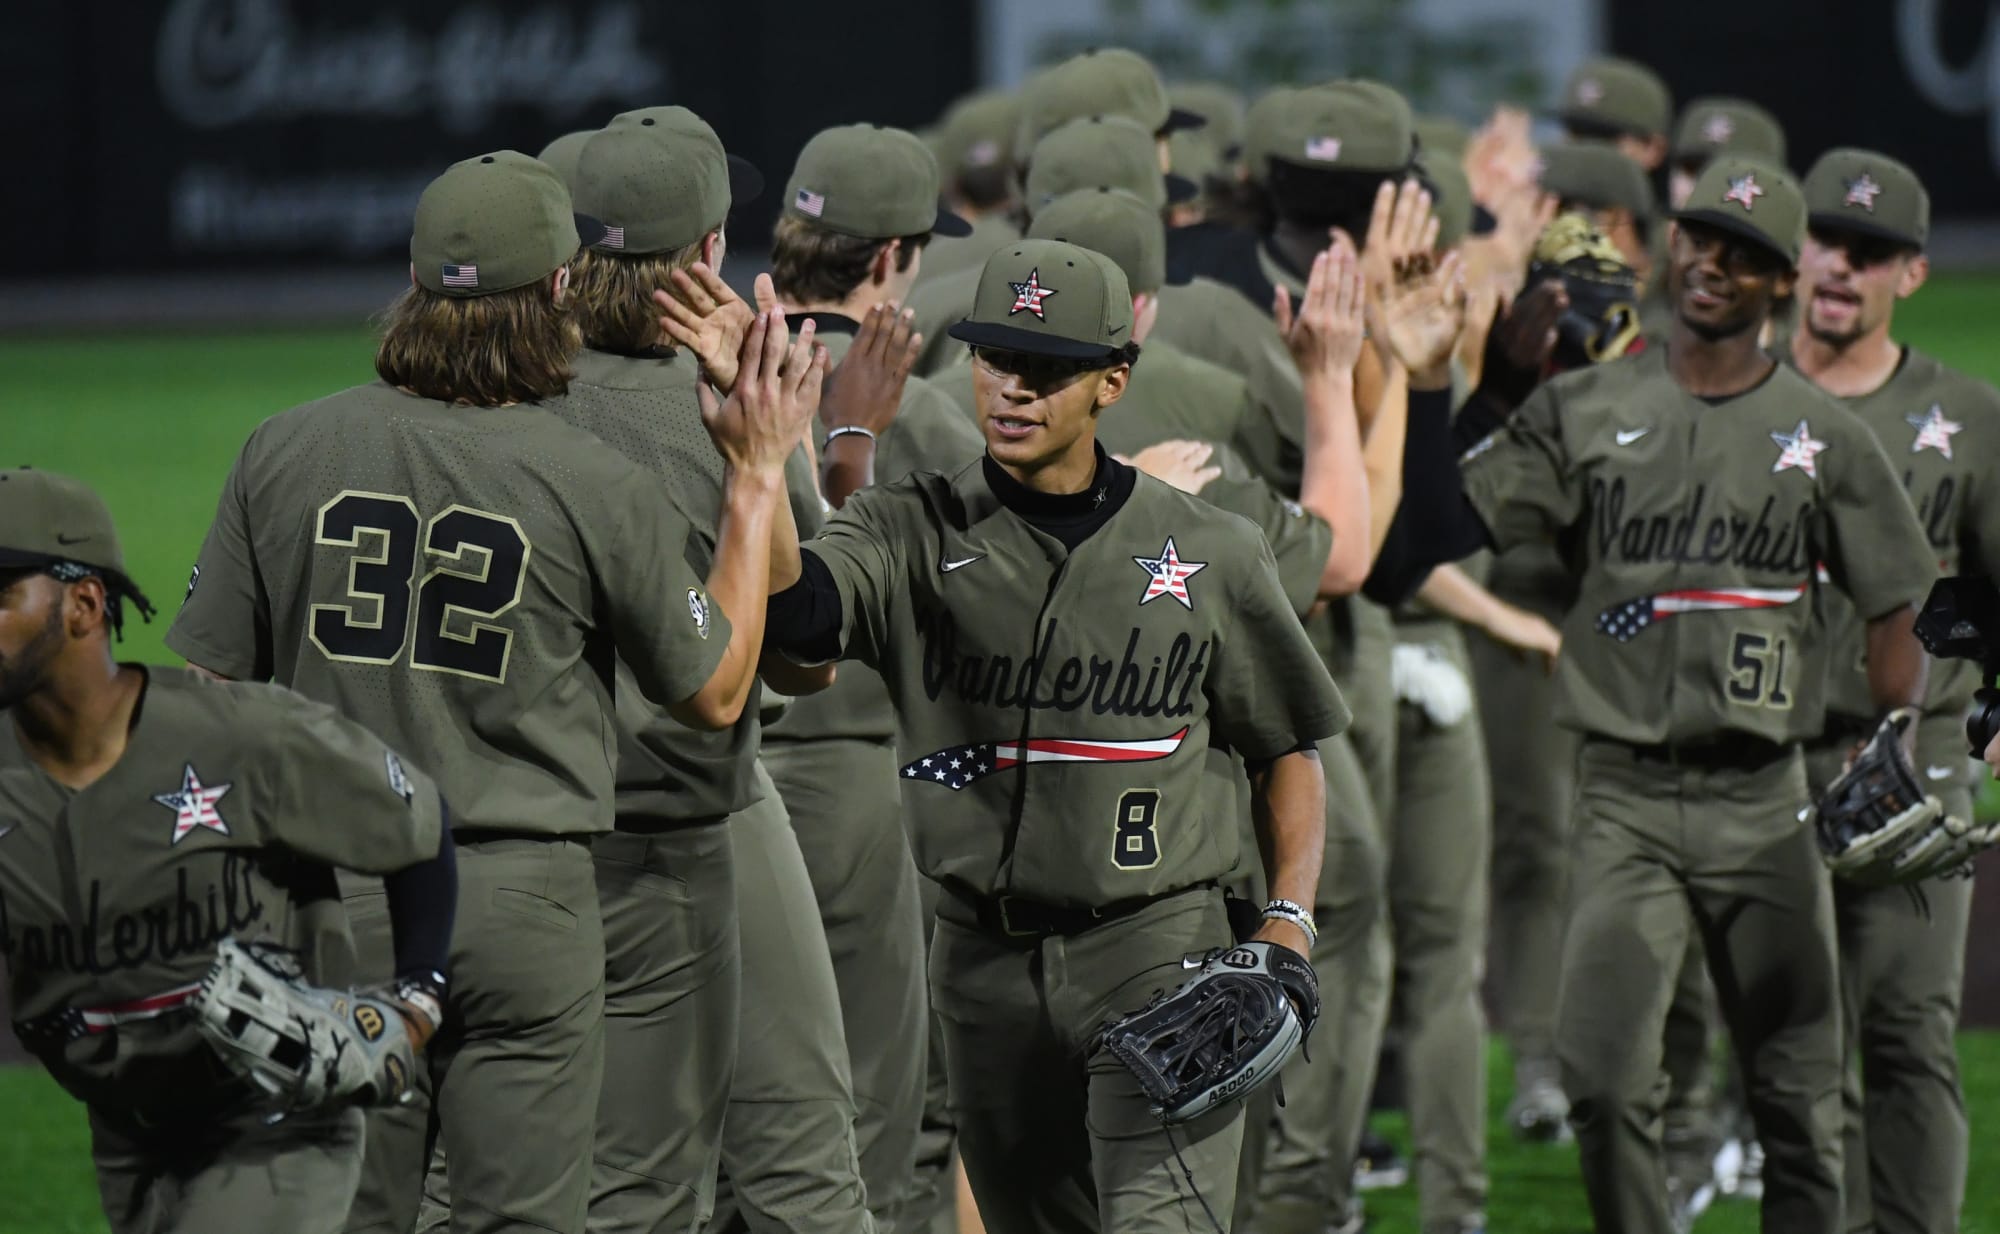 Vanderbilt Baseball Army Green Uniforms Army Military